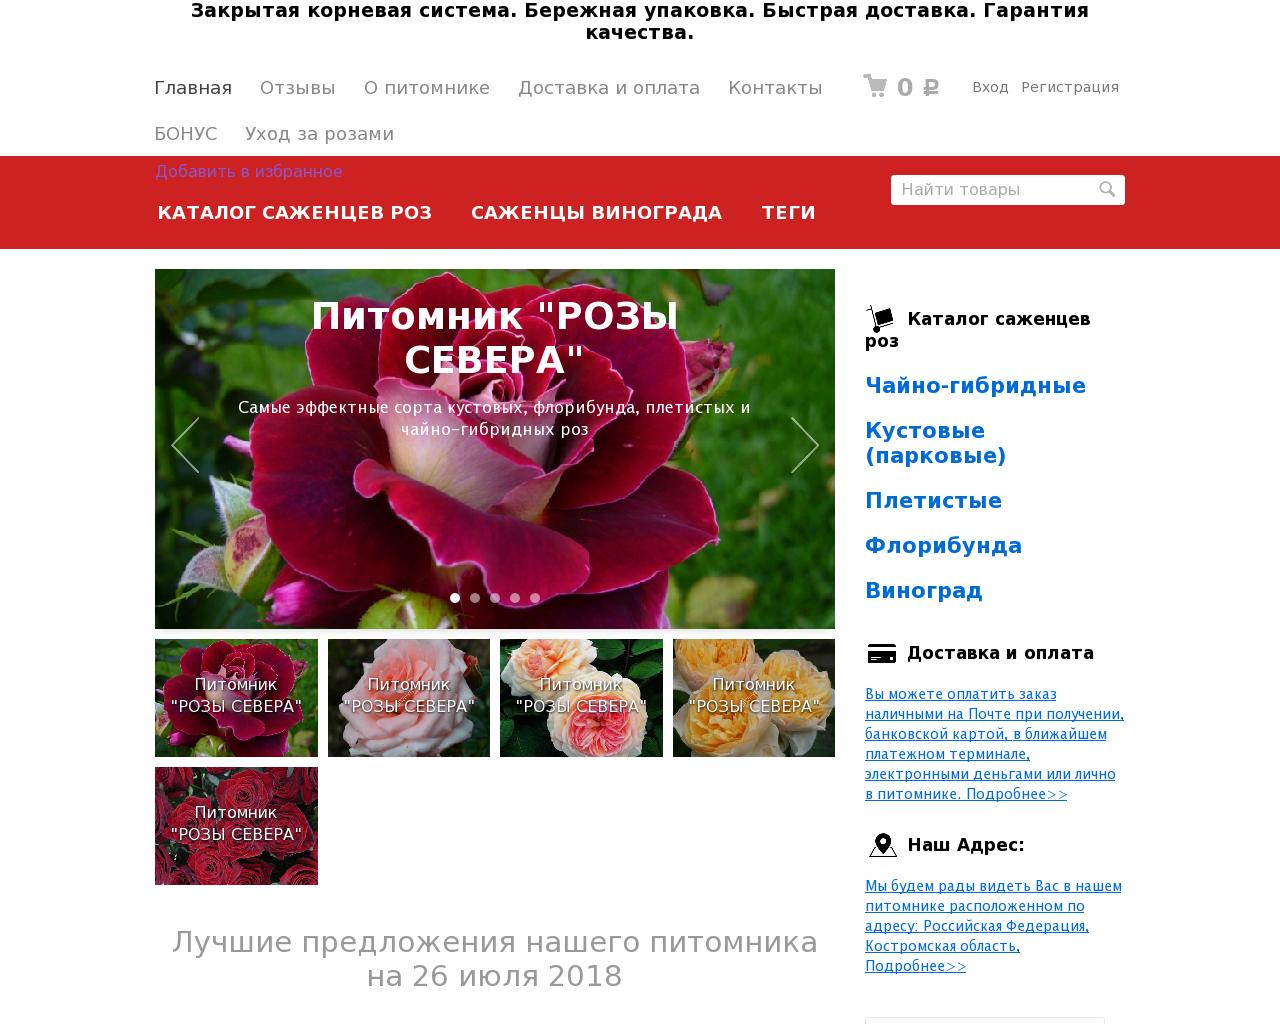 Изображение сайта malina-vip.ru в разрешении 1280x1024